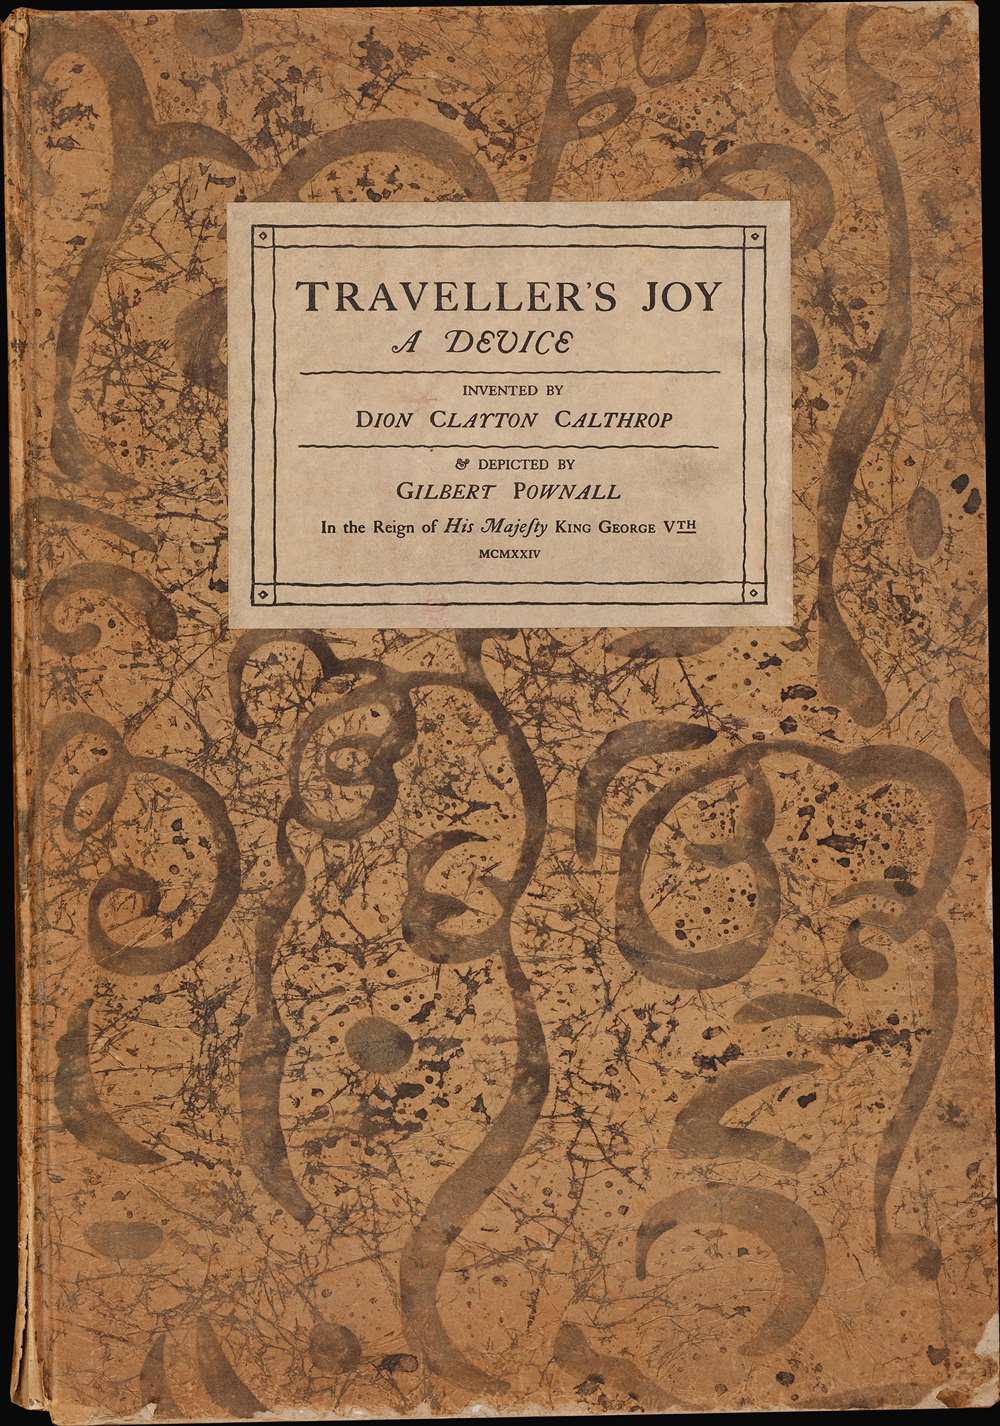 Traveller's joy : a device - Alternate View 2